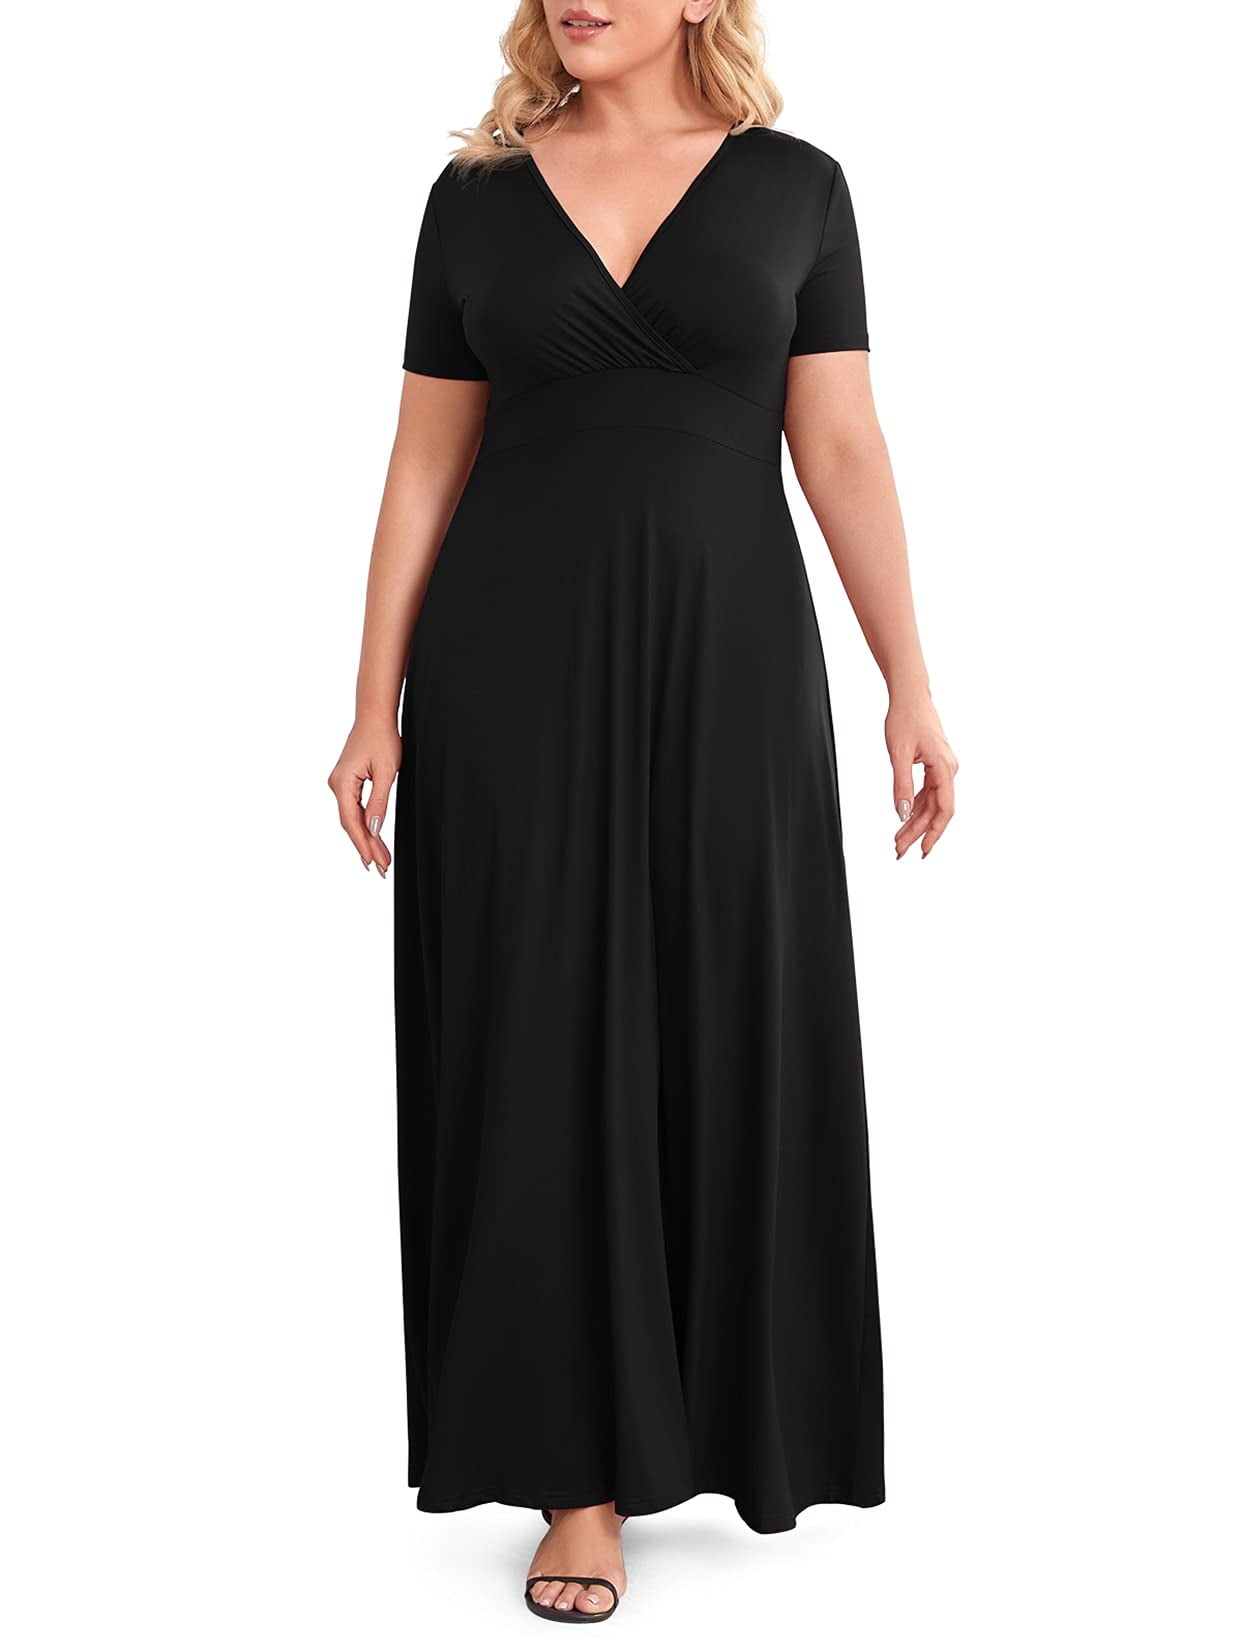 POSESHE Women's Solid V-Neck Short Sleeve Long Dress, Plus Size Gown -  Walmart.com